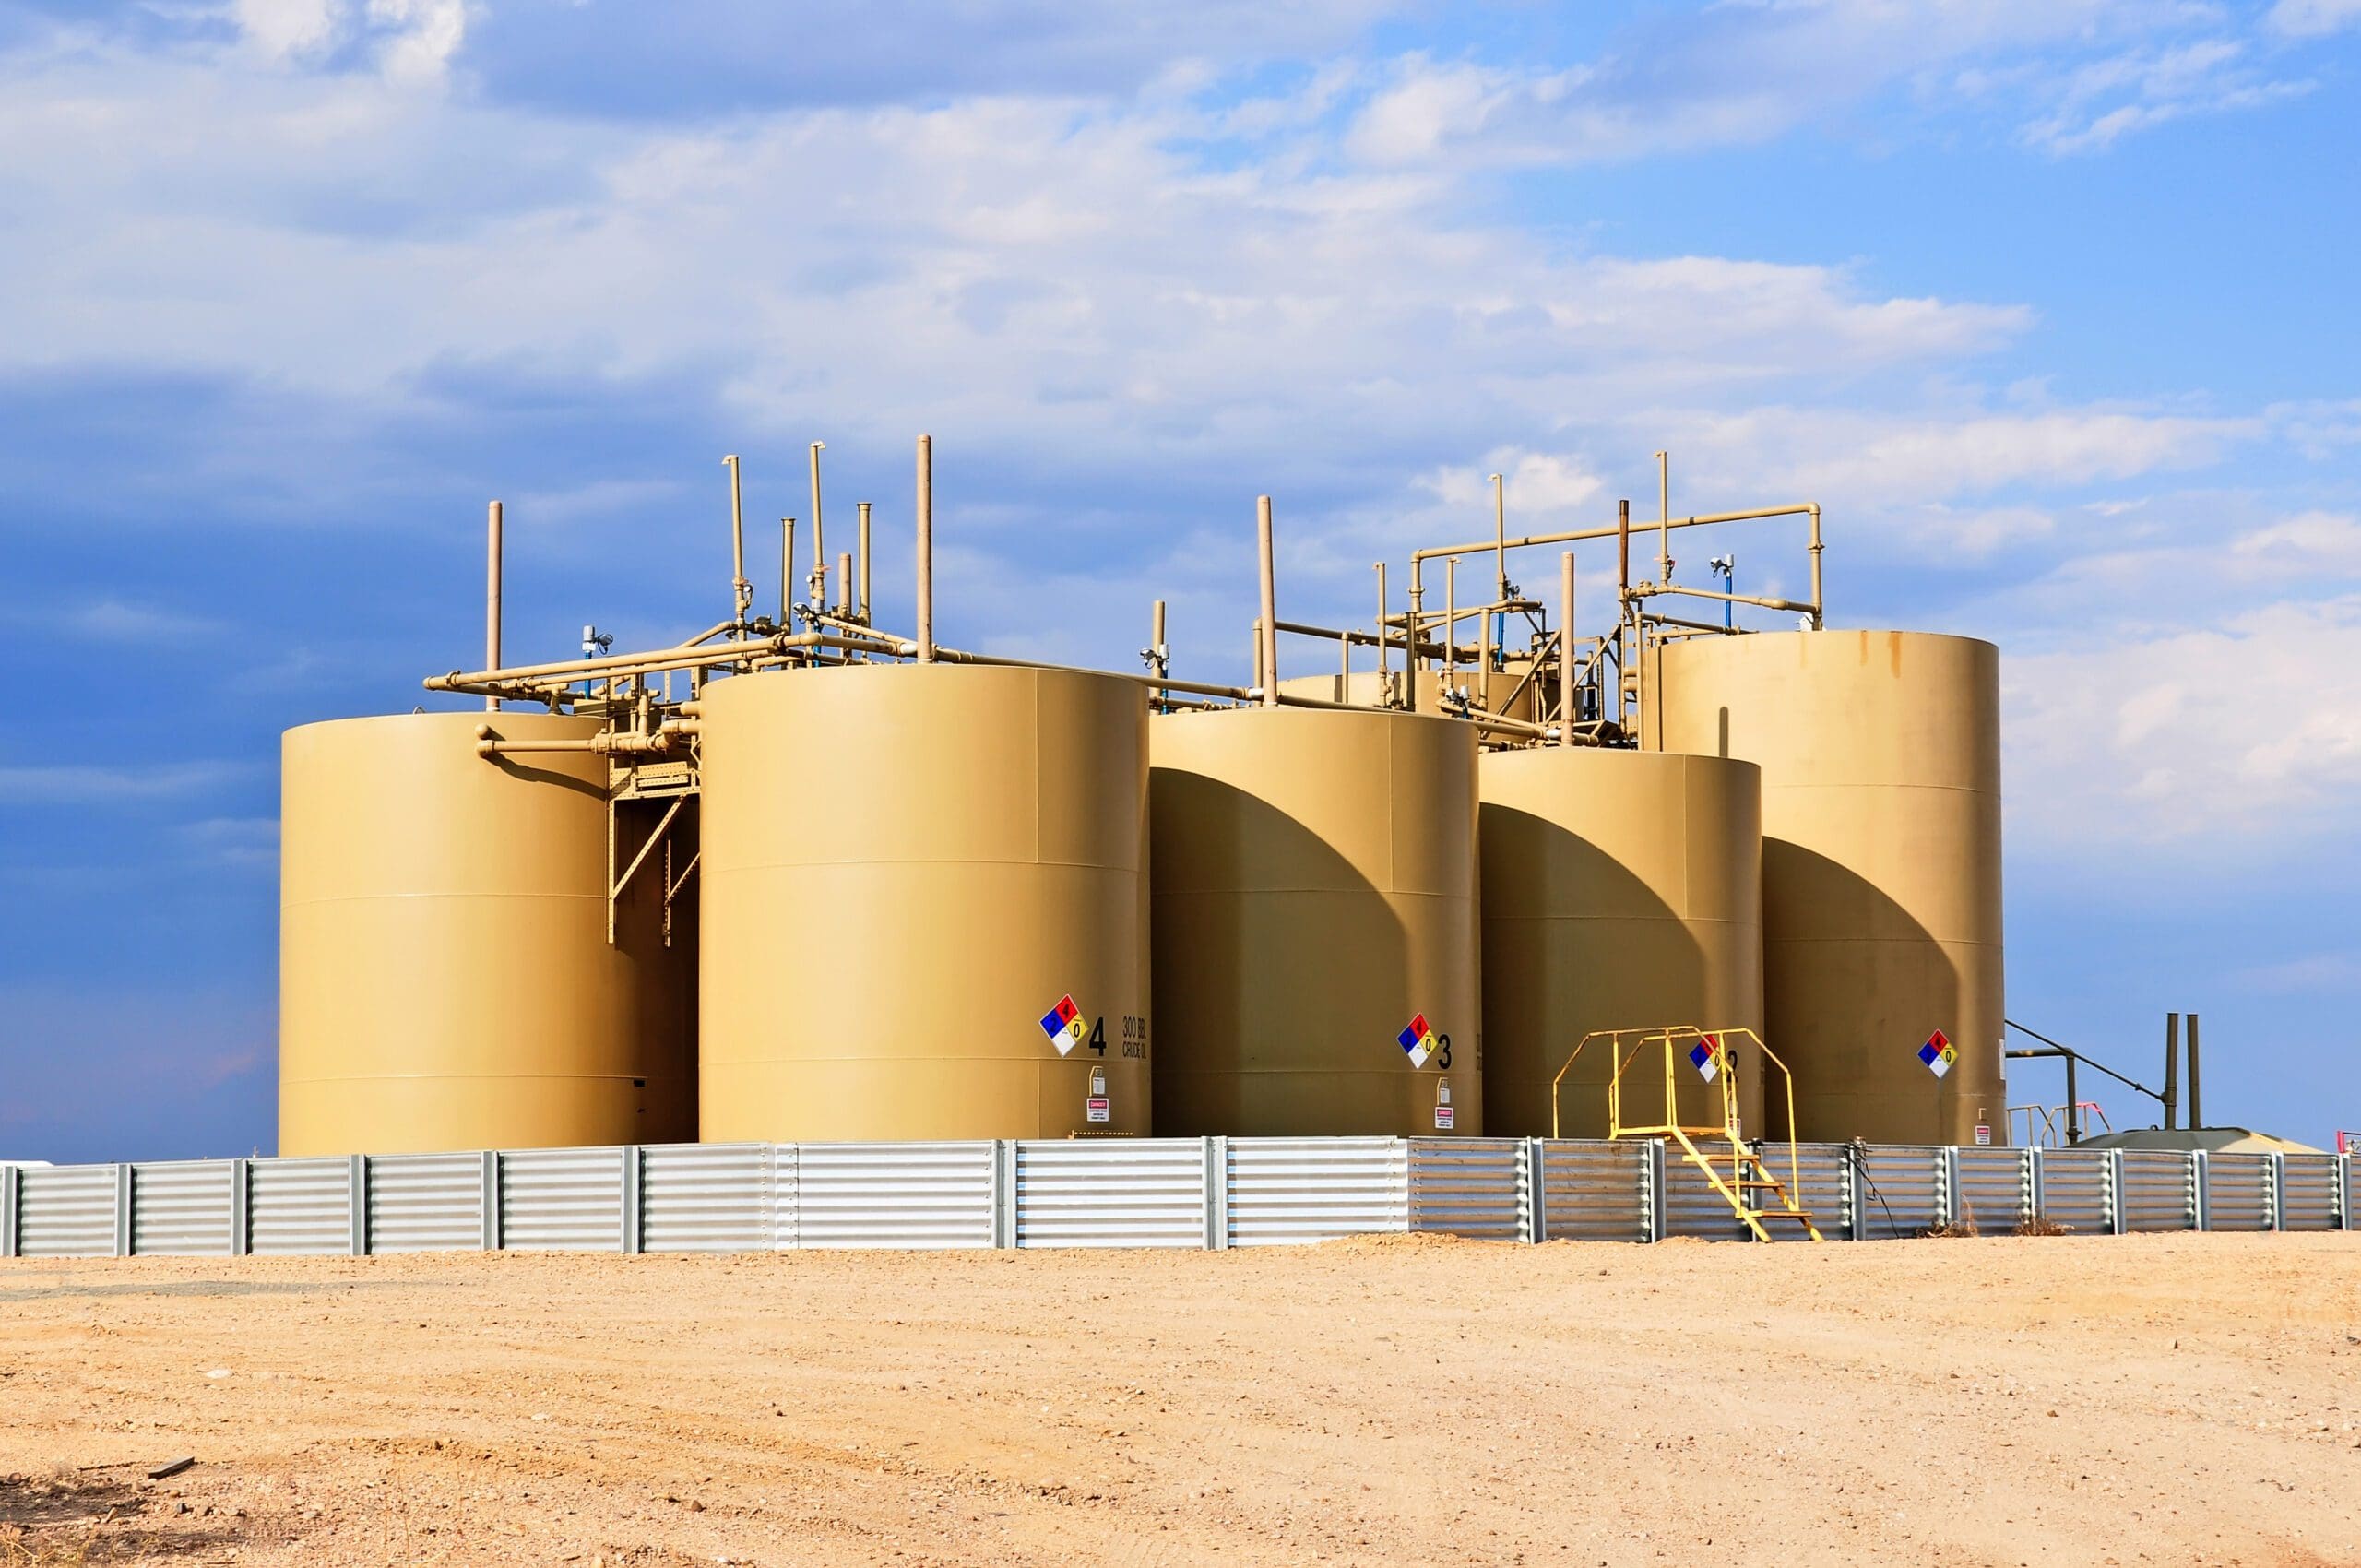 Storage tanks for crude oil in central Colorado